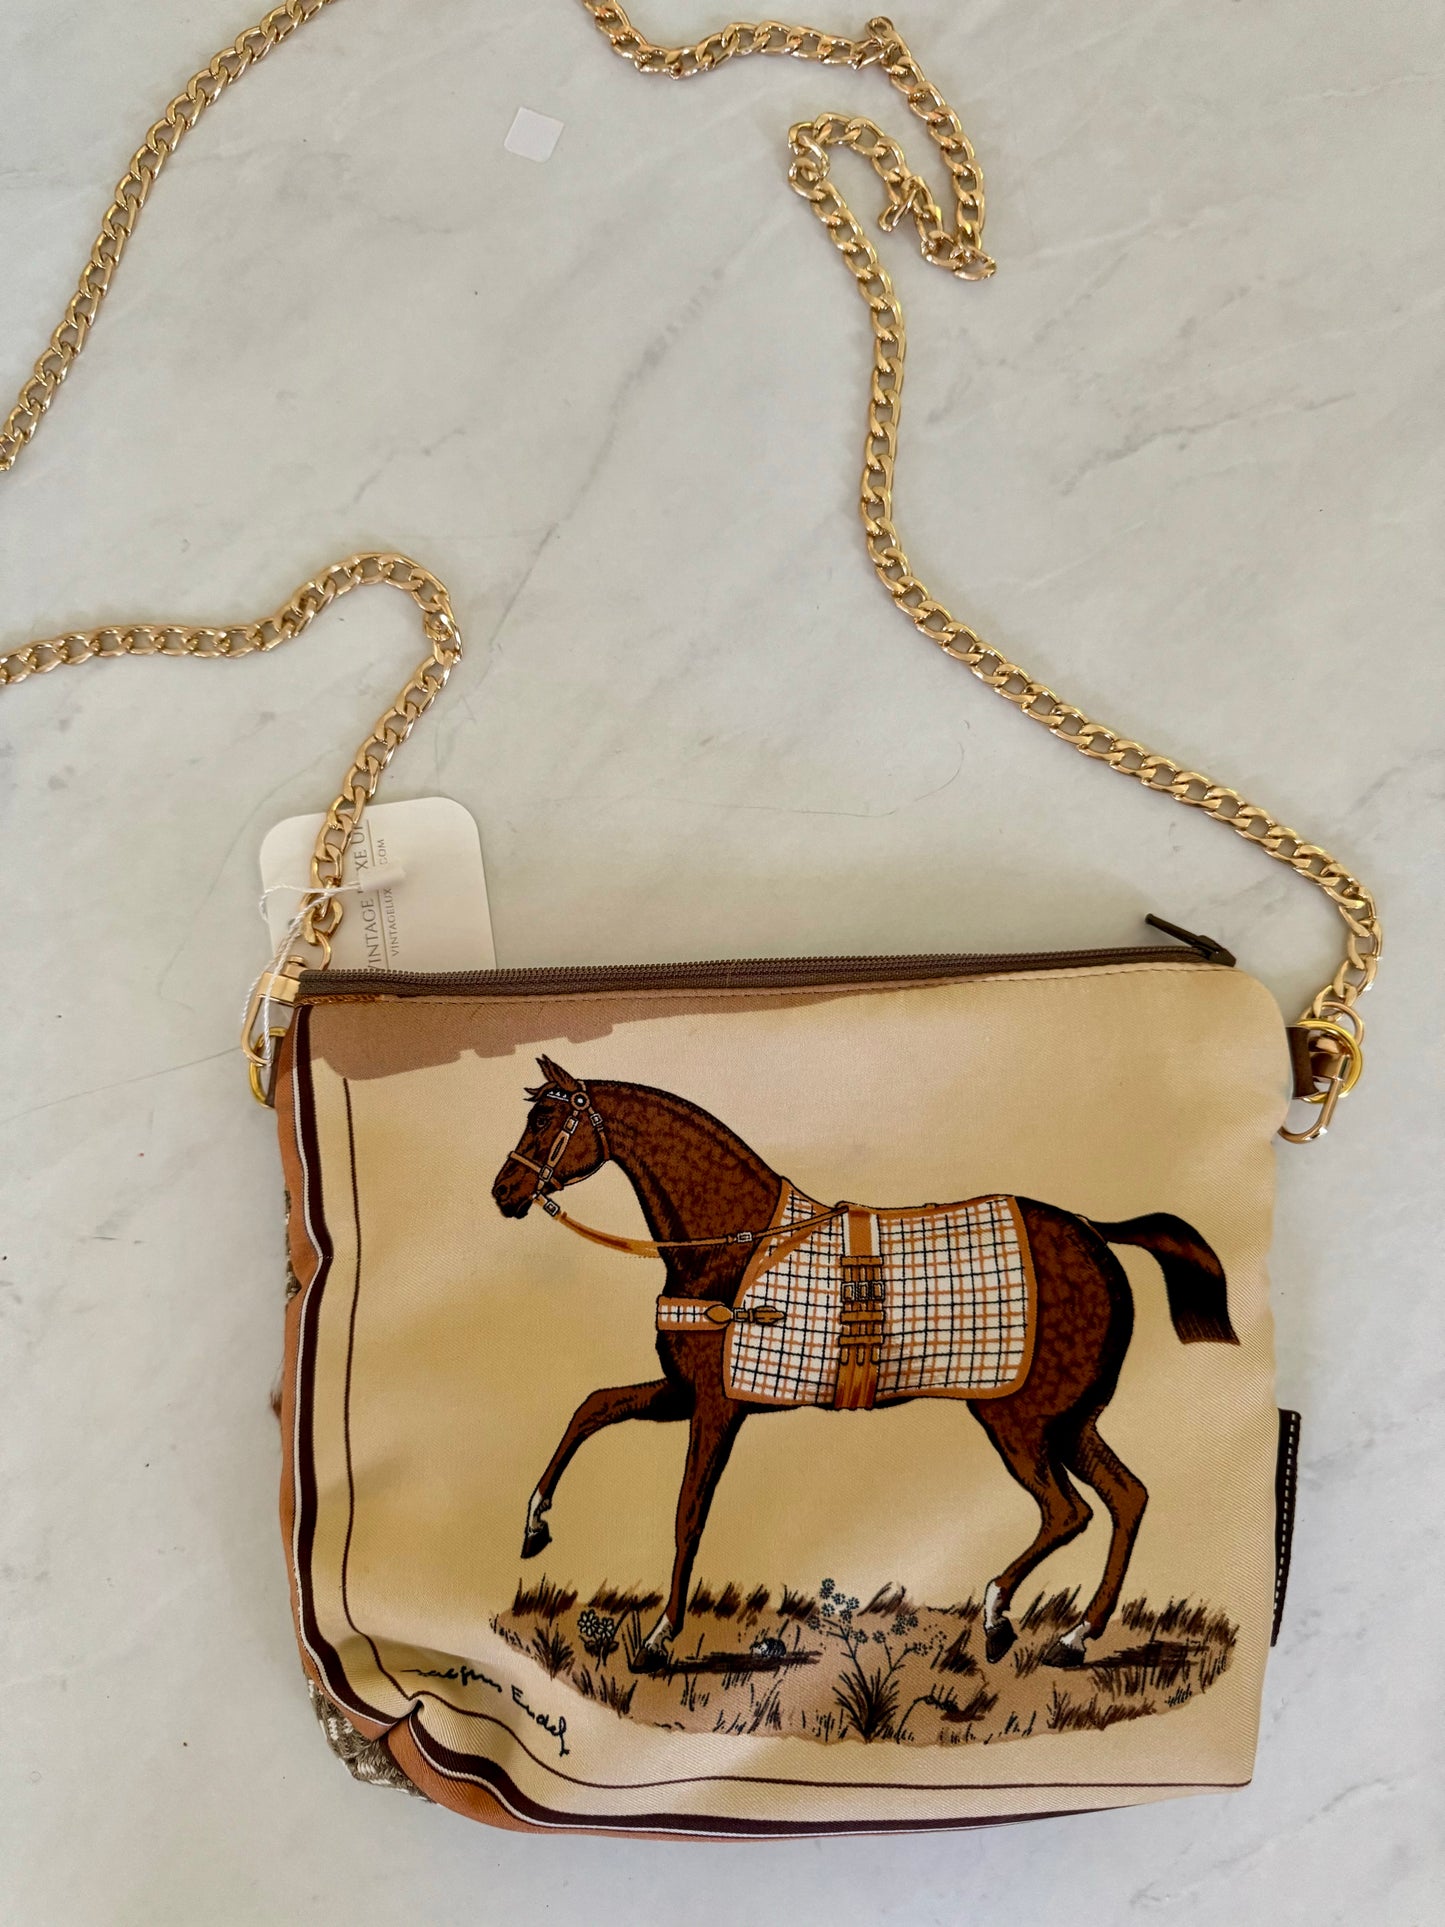 Vintage Hermes equestrian scarf reimagined into a crossbody bag